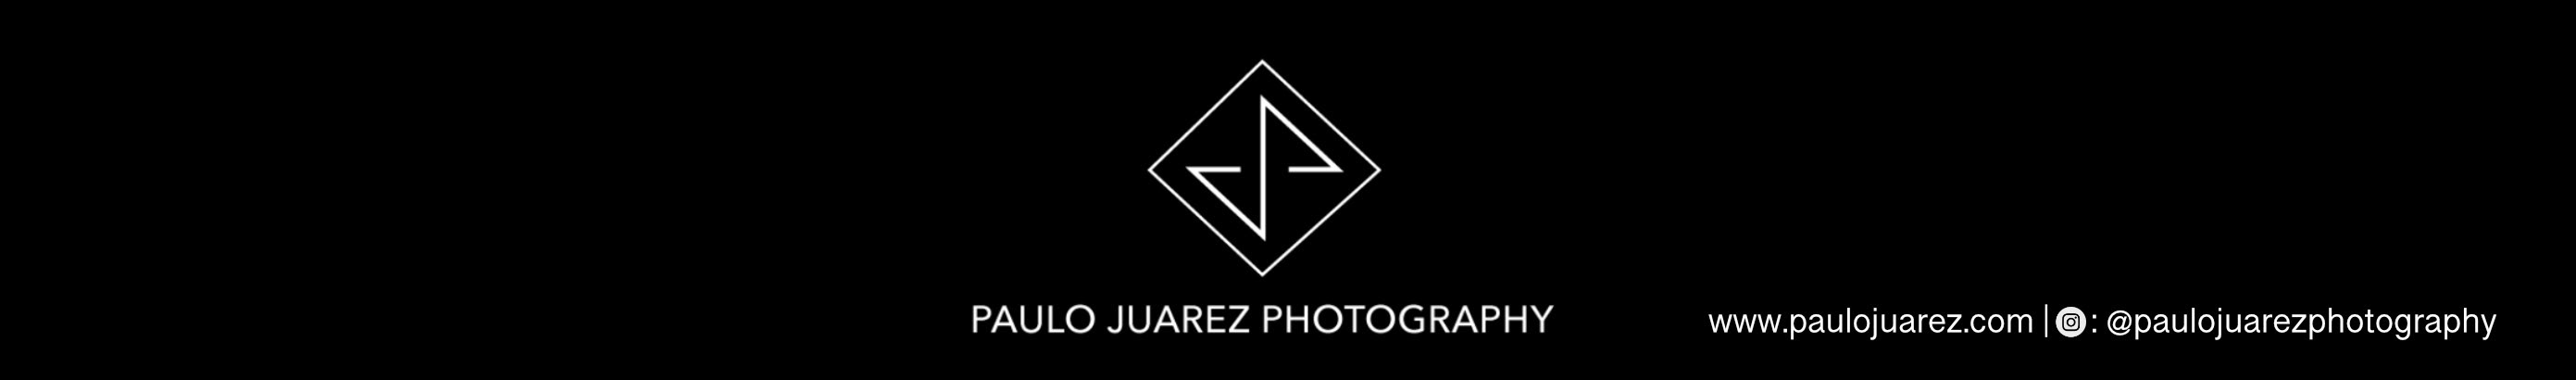 Paulo Juarez's profile banner